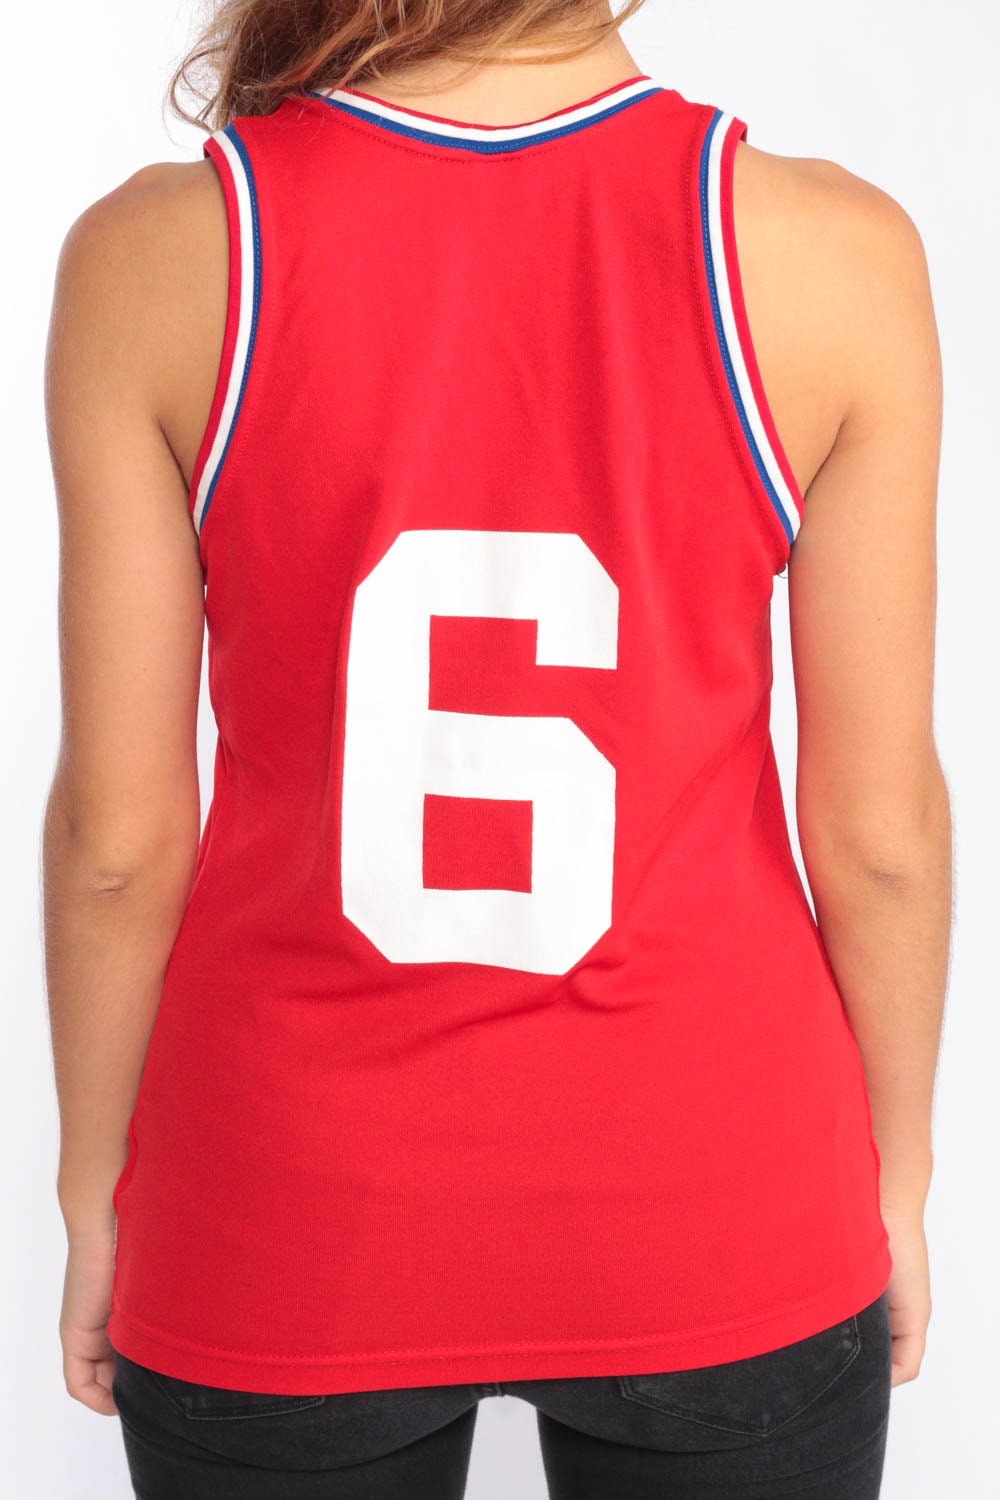 Sixers Jersey 76ers Jersey Basketball Jersey Shirt ...